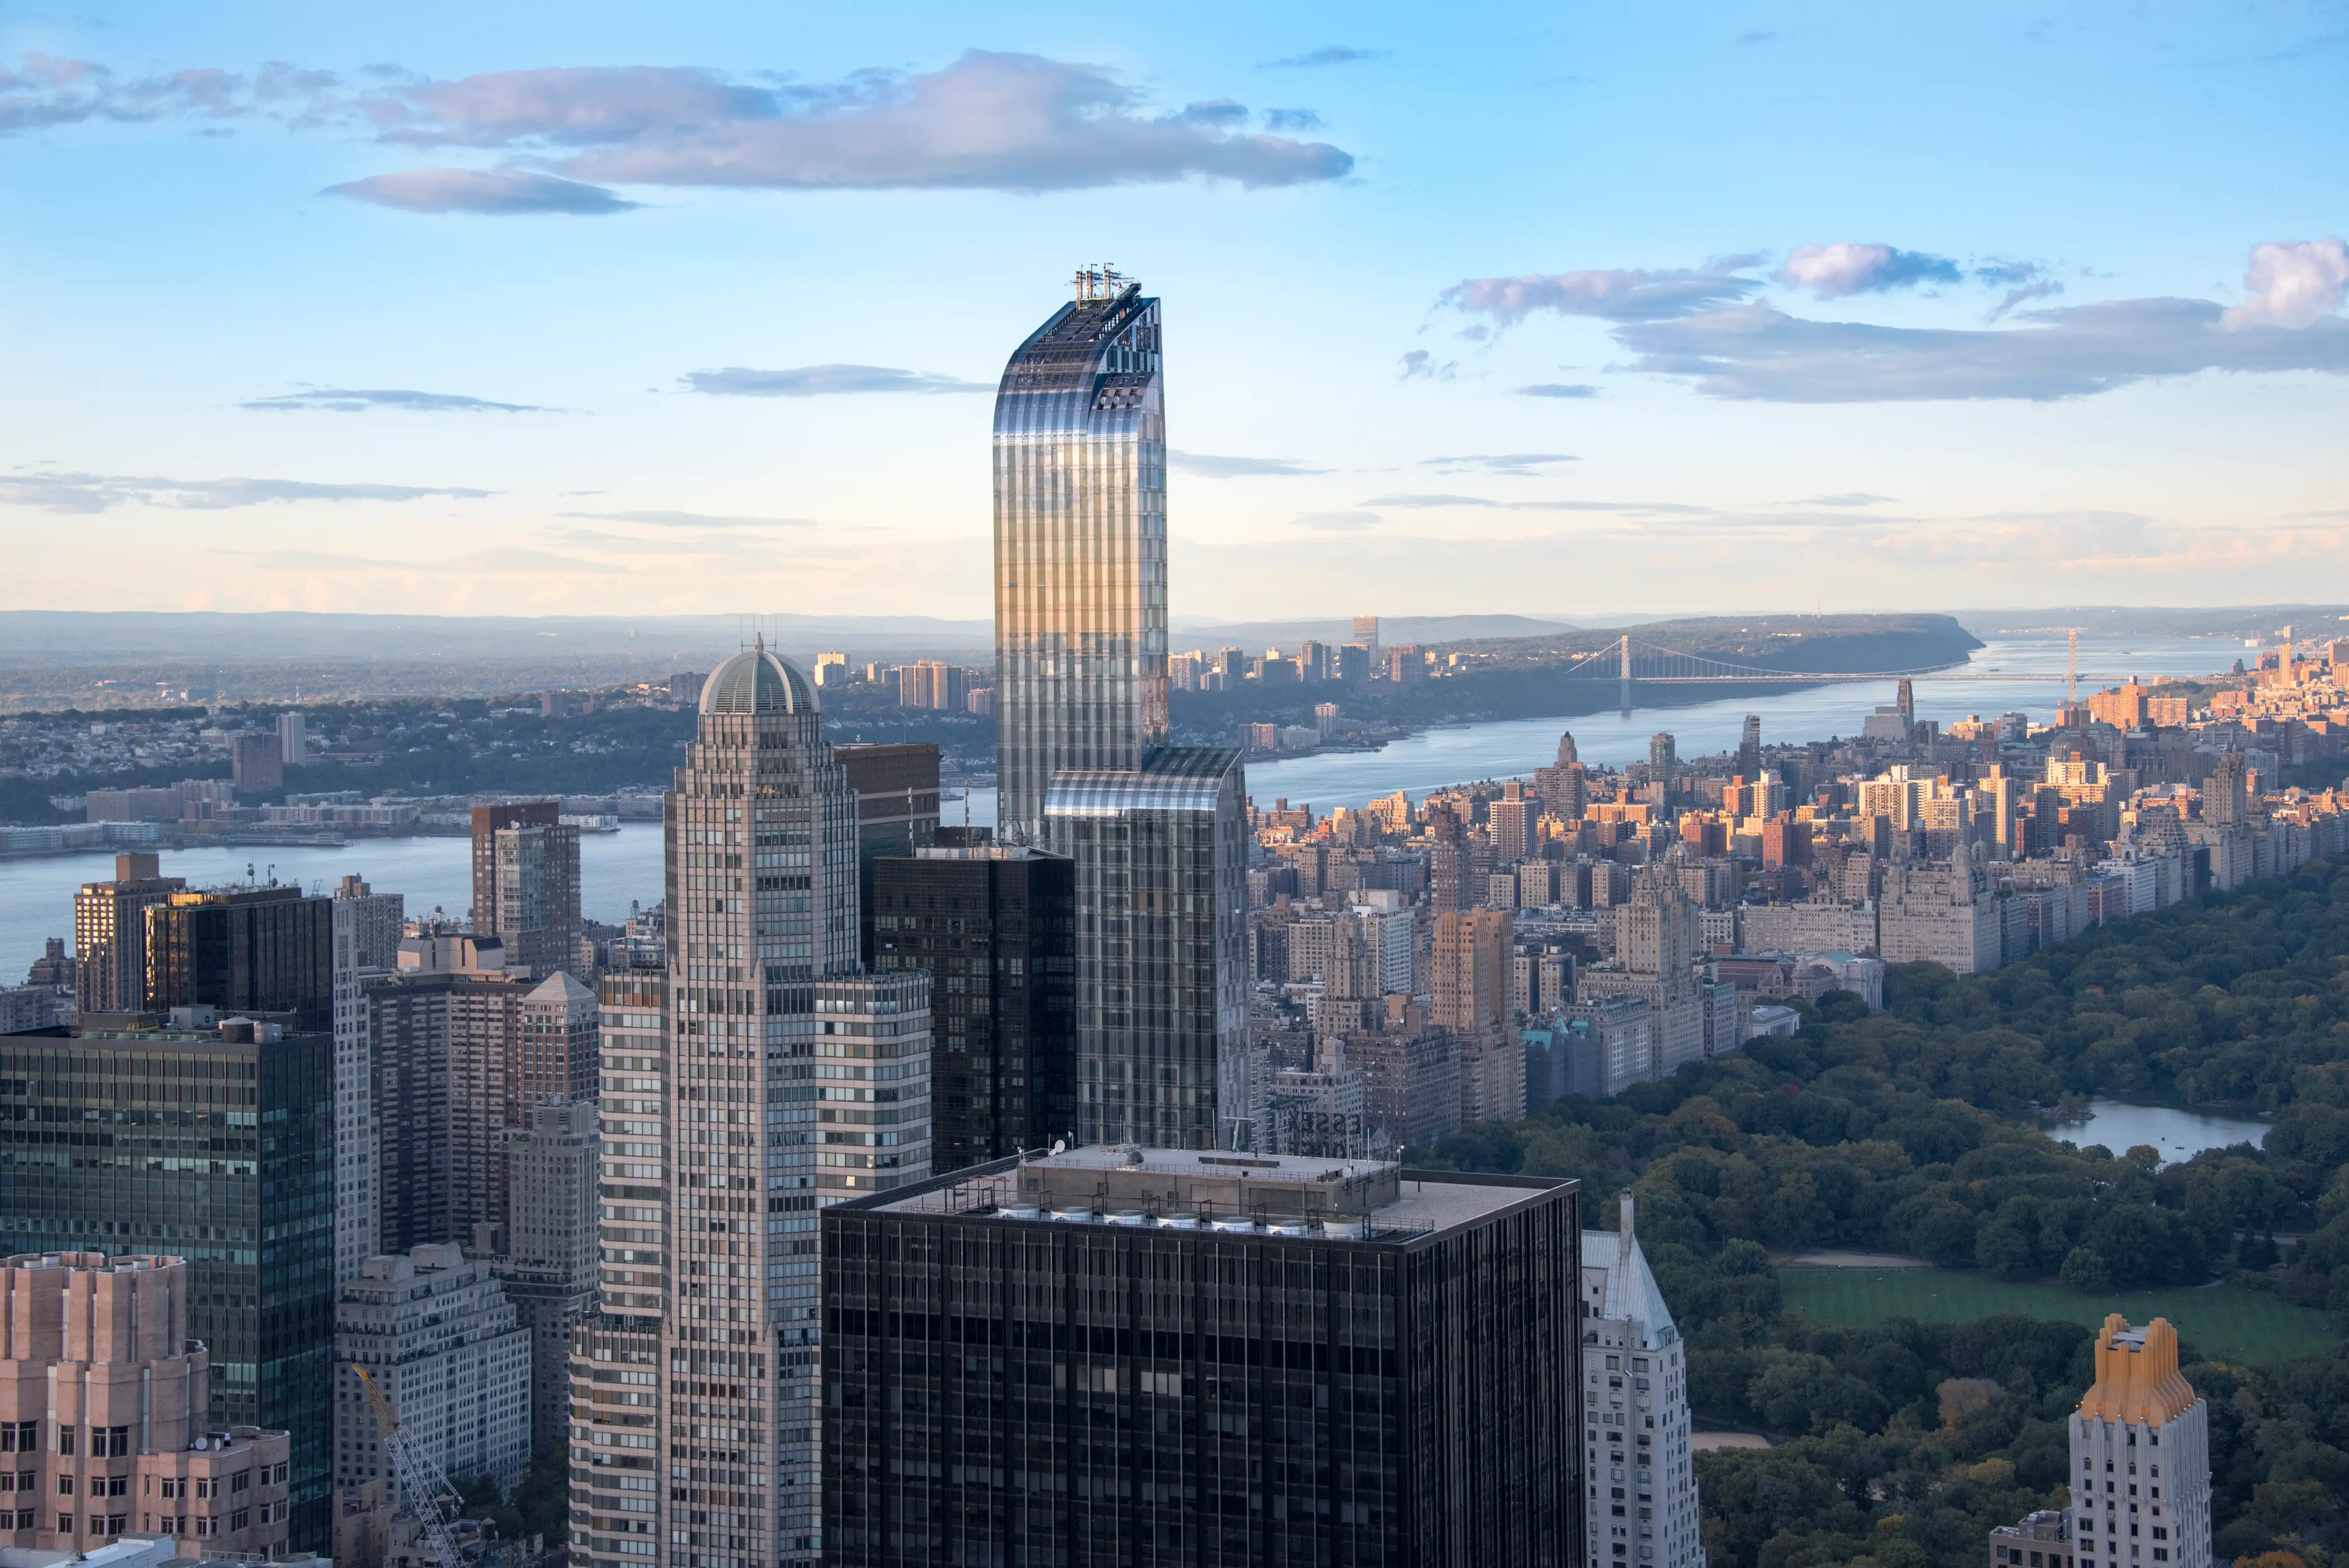 New York landmarks and attractions: New York city skyline